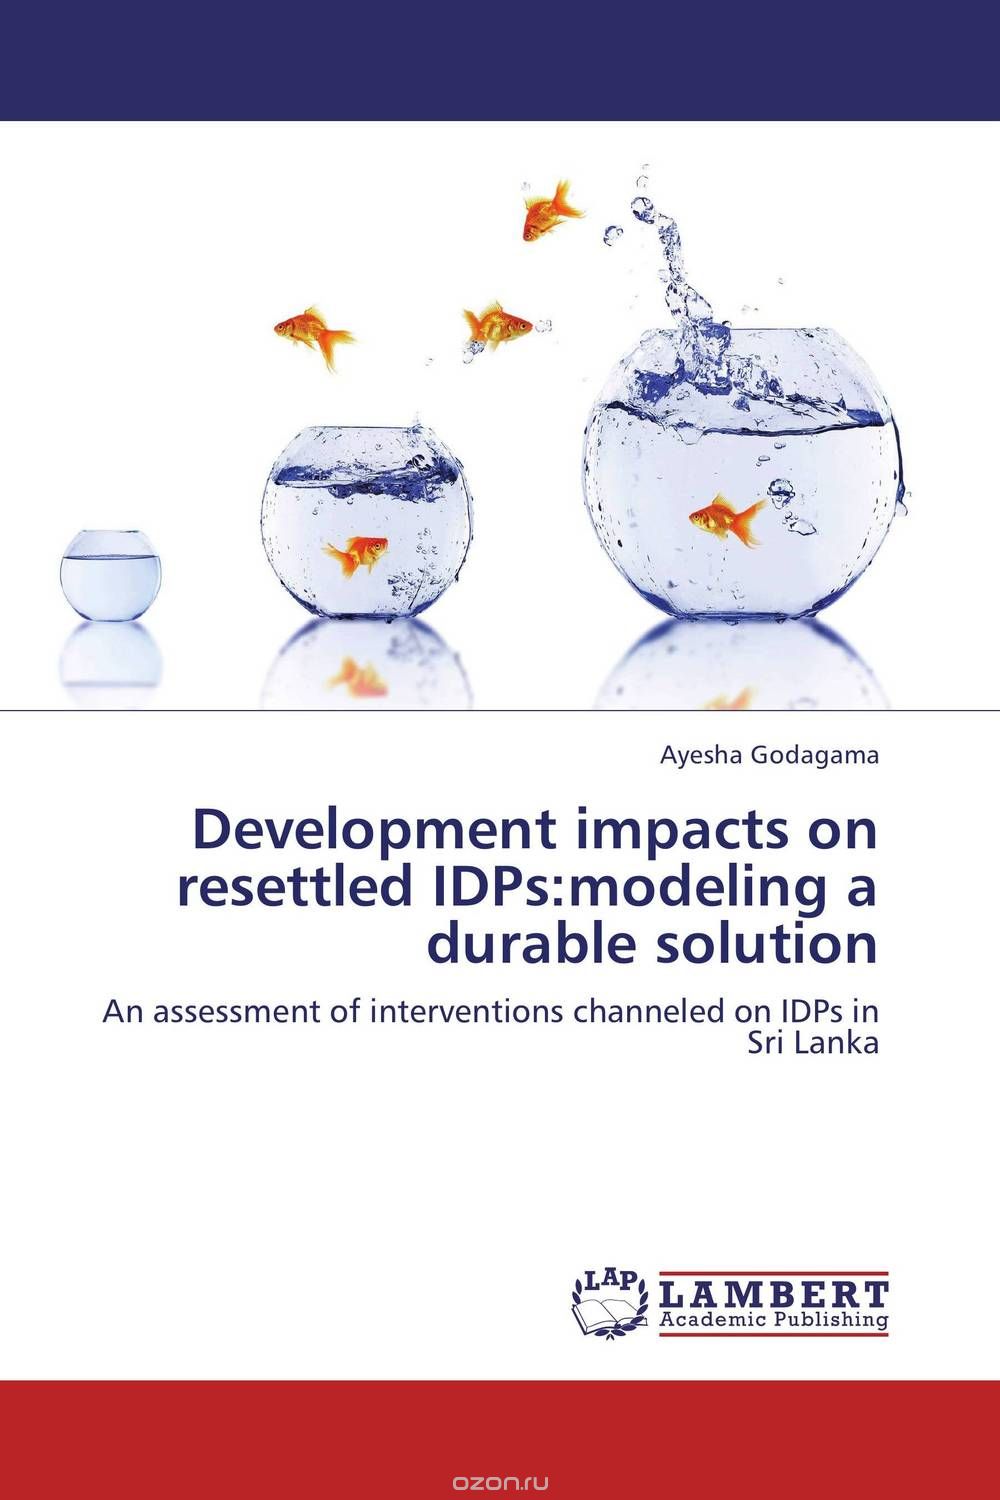 Скачать книгу "Development impacts on resettled IDPs:modeling a durable solution"